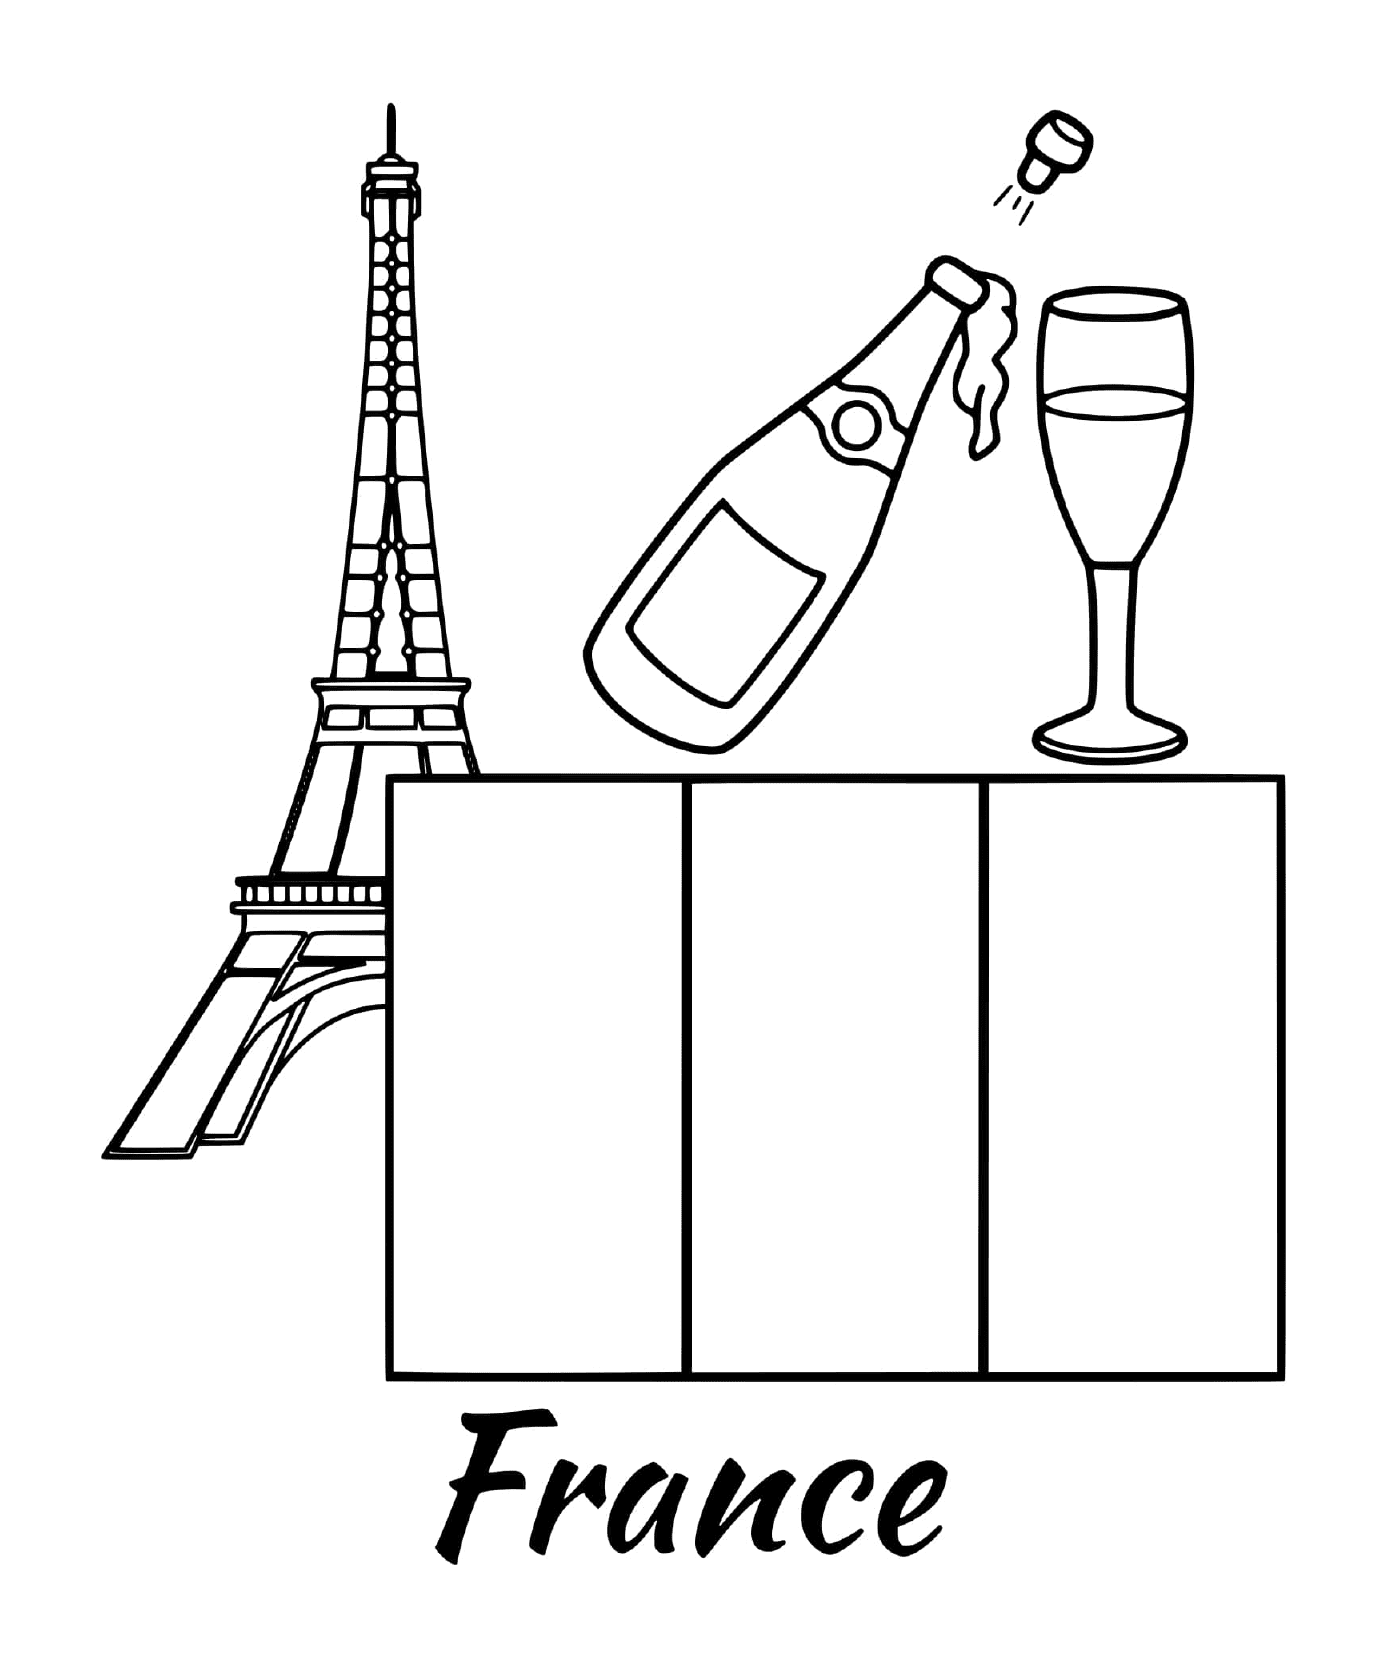  Bandiera della Francia con la Torre Eiffel 